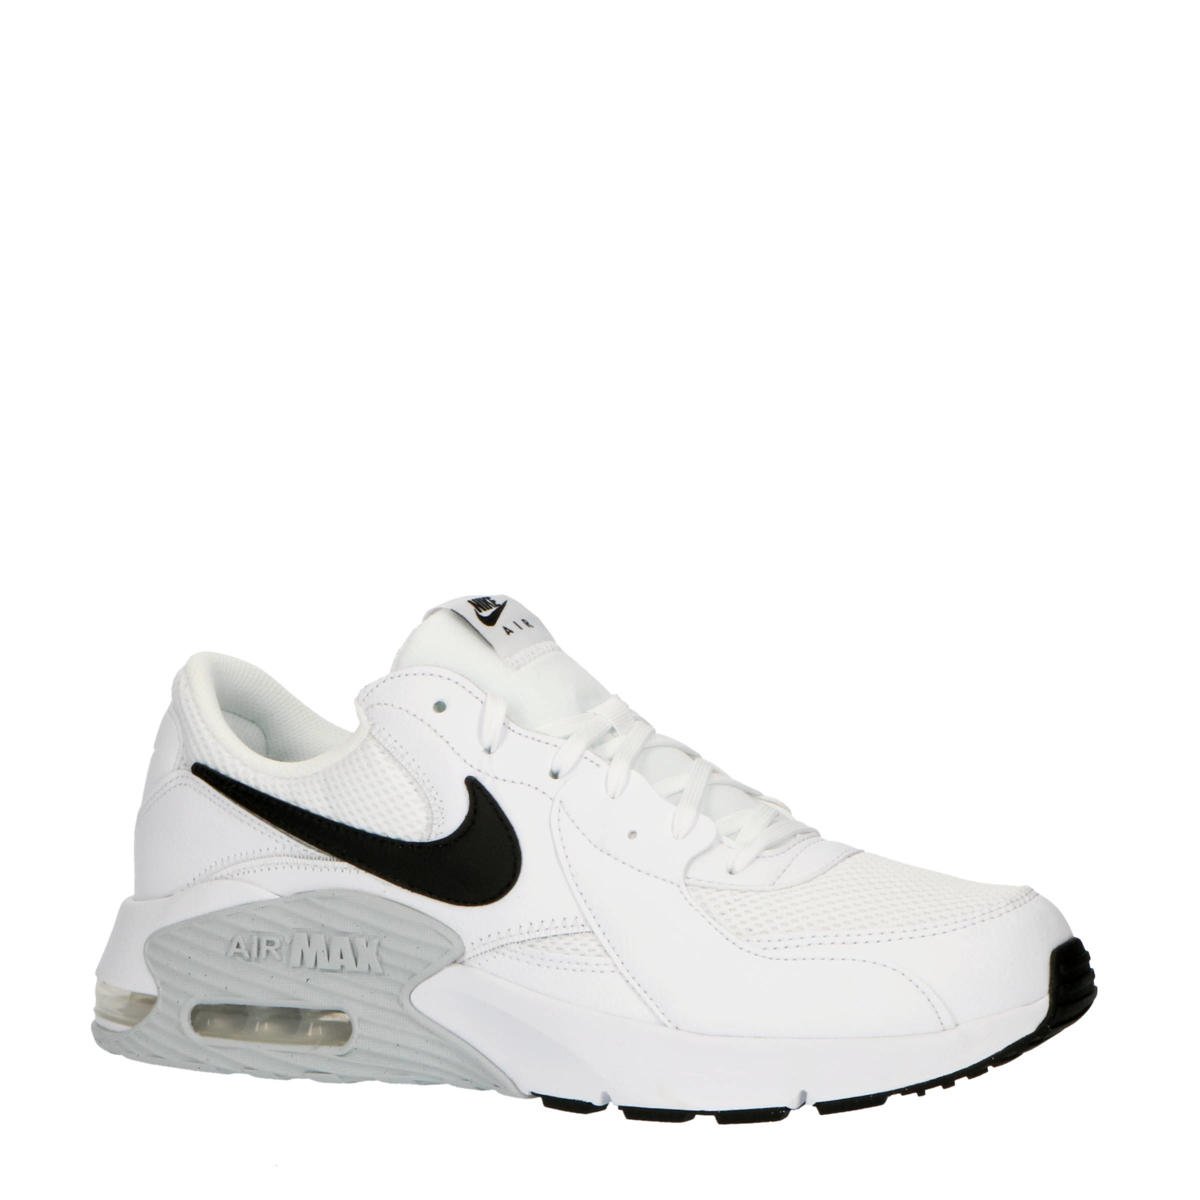 Allergisch klep Aap Nike Air Max Excee sneakers wit/zwart/zilver | wehkamp